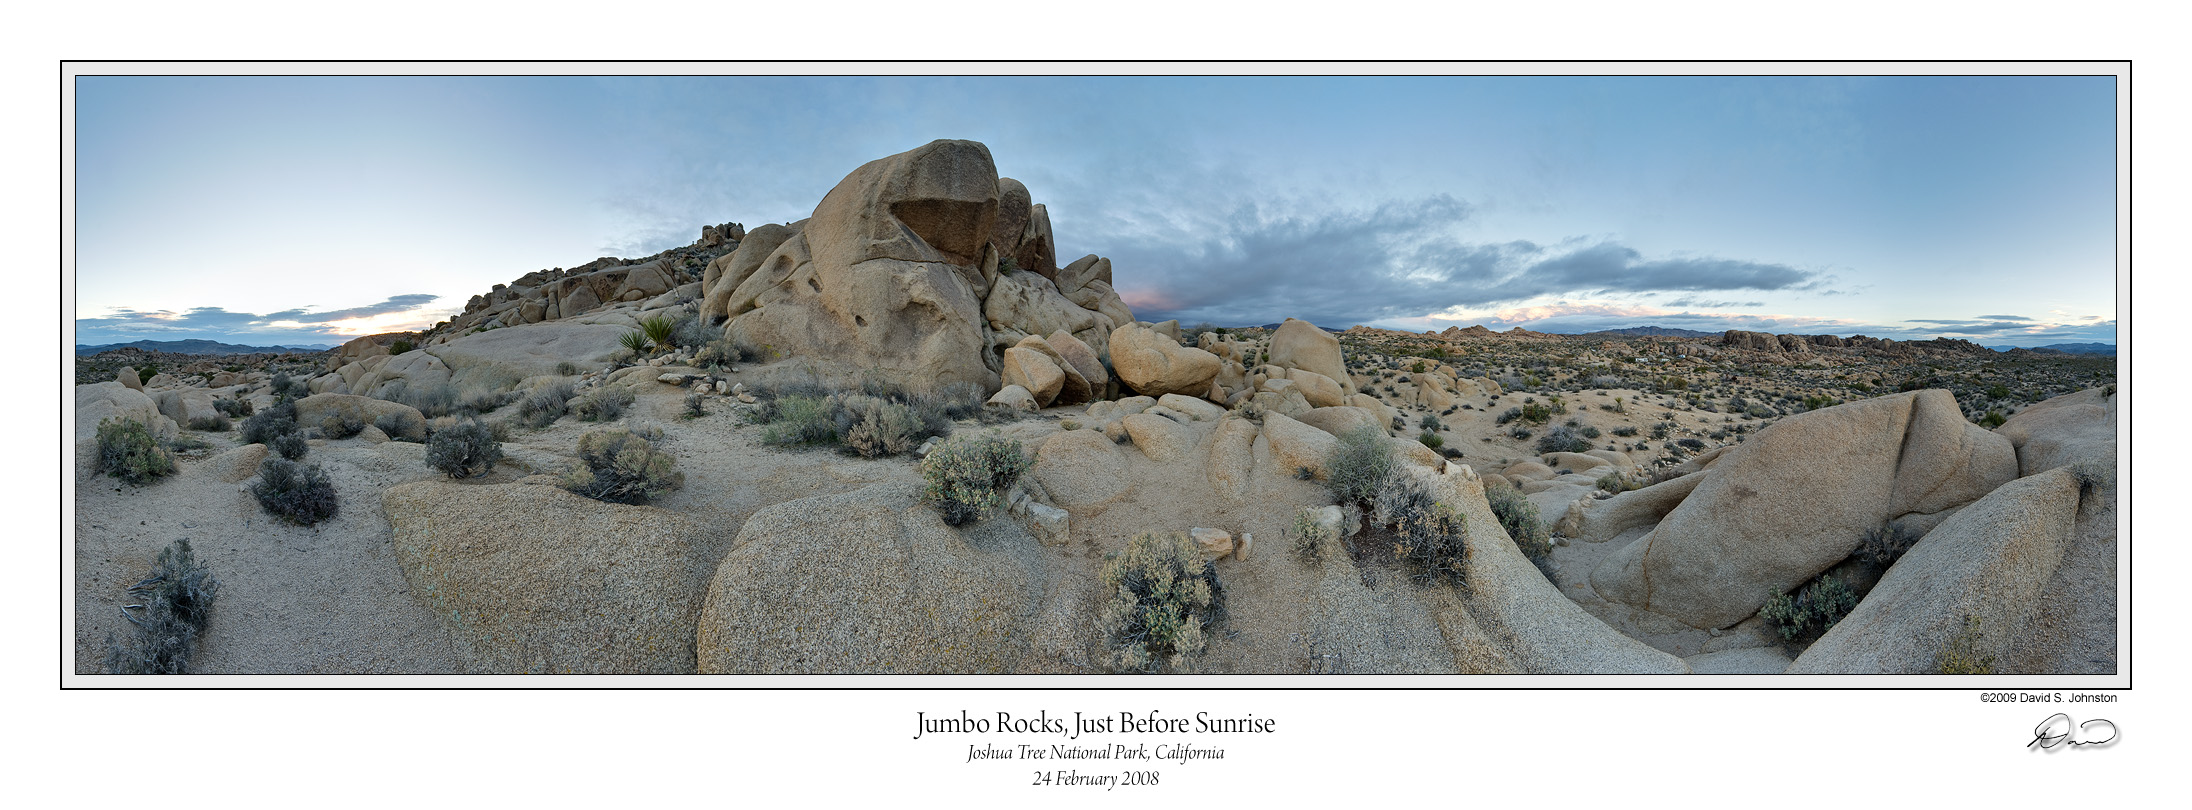 Jumbo Rocks Before Sunrise.jpg